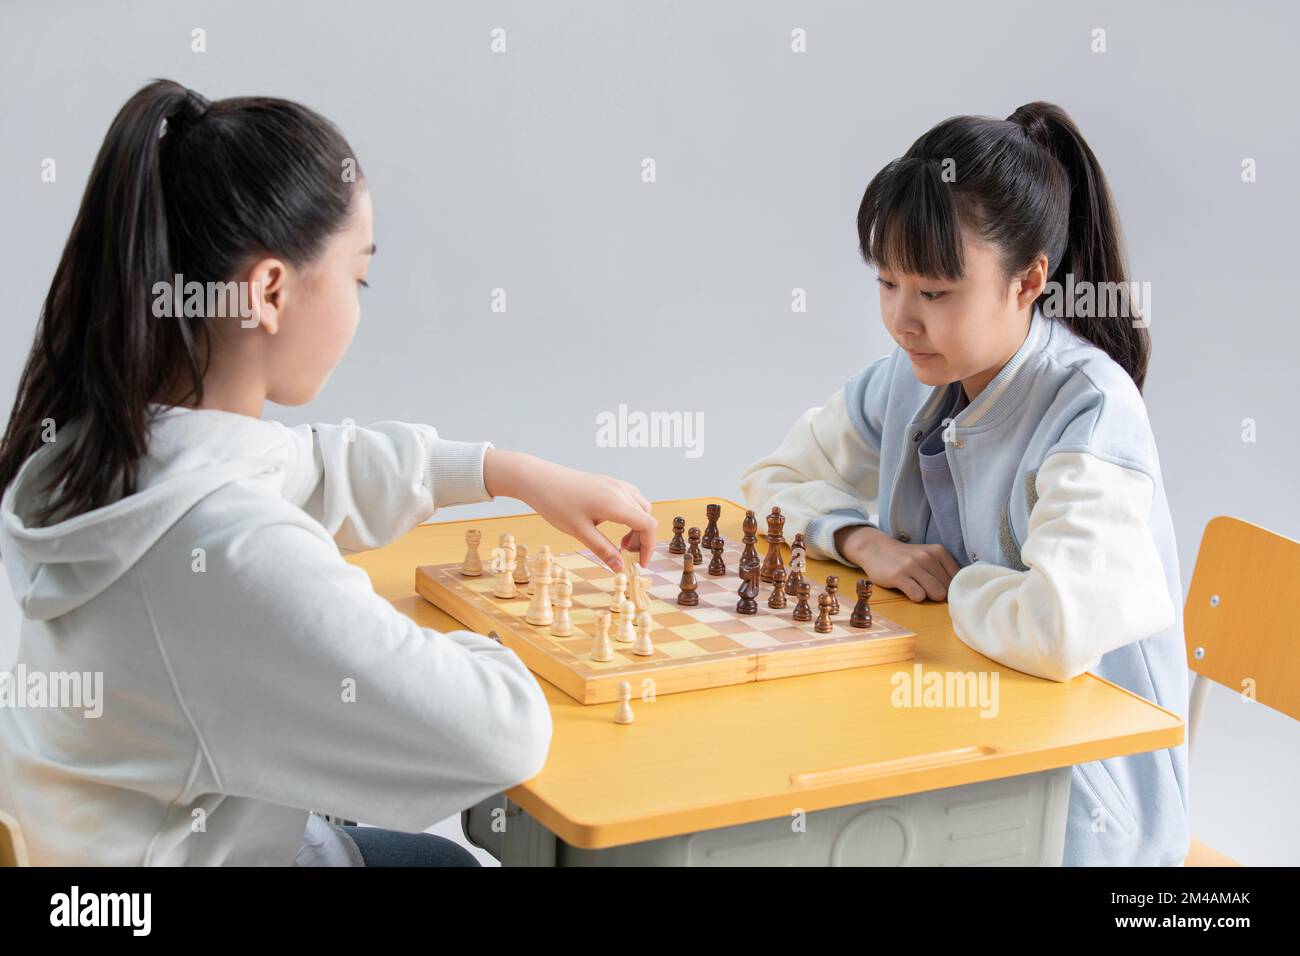 Two Chinese girls playing chess Stock Photo